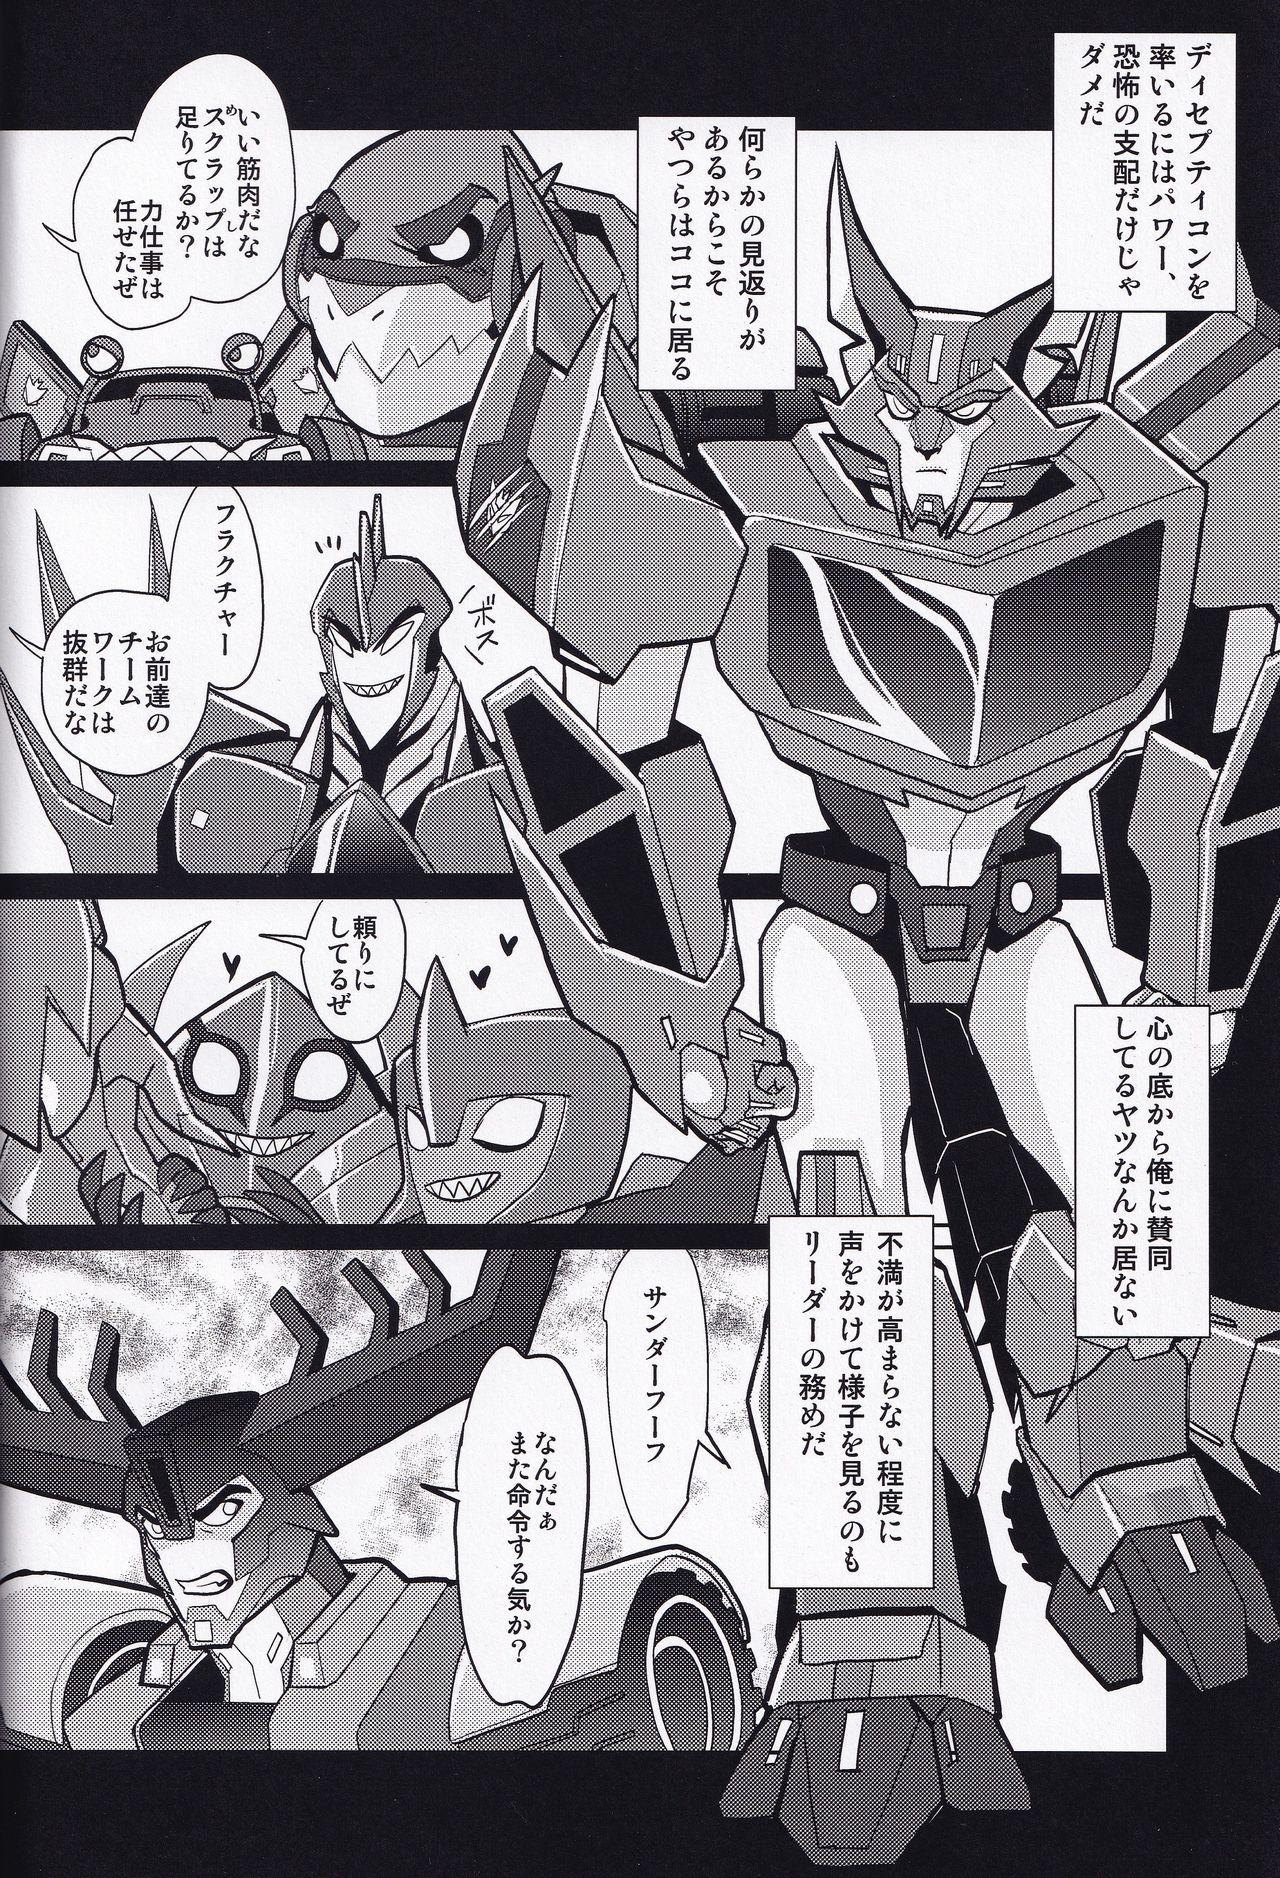 Piss Ibara no Ou - Transformers Punk - Page 5